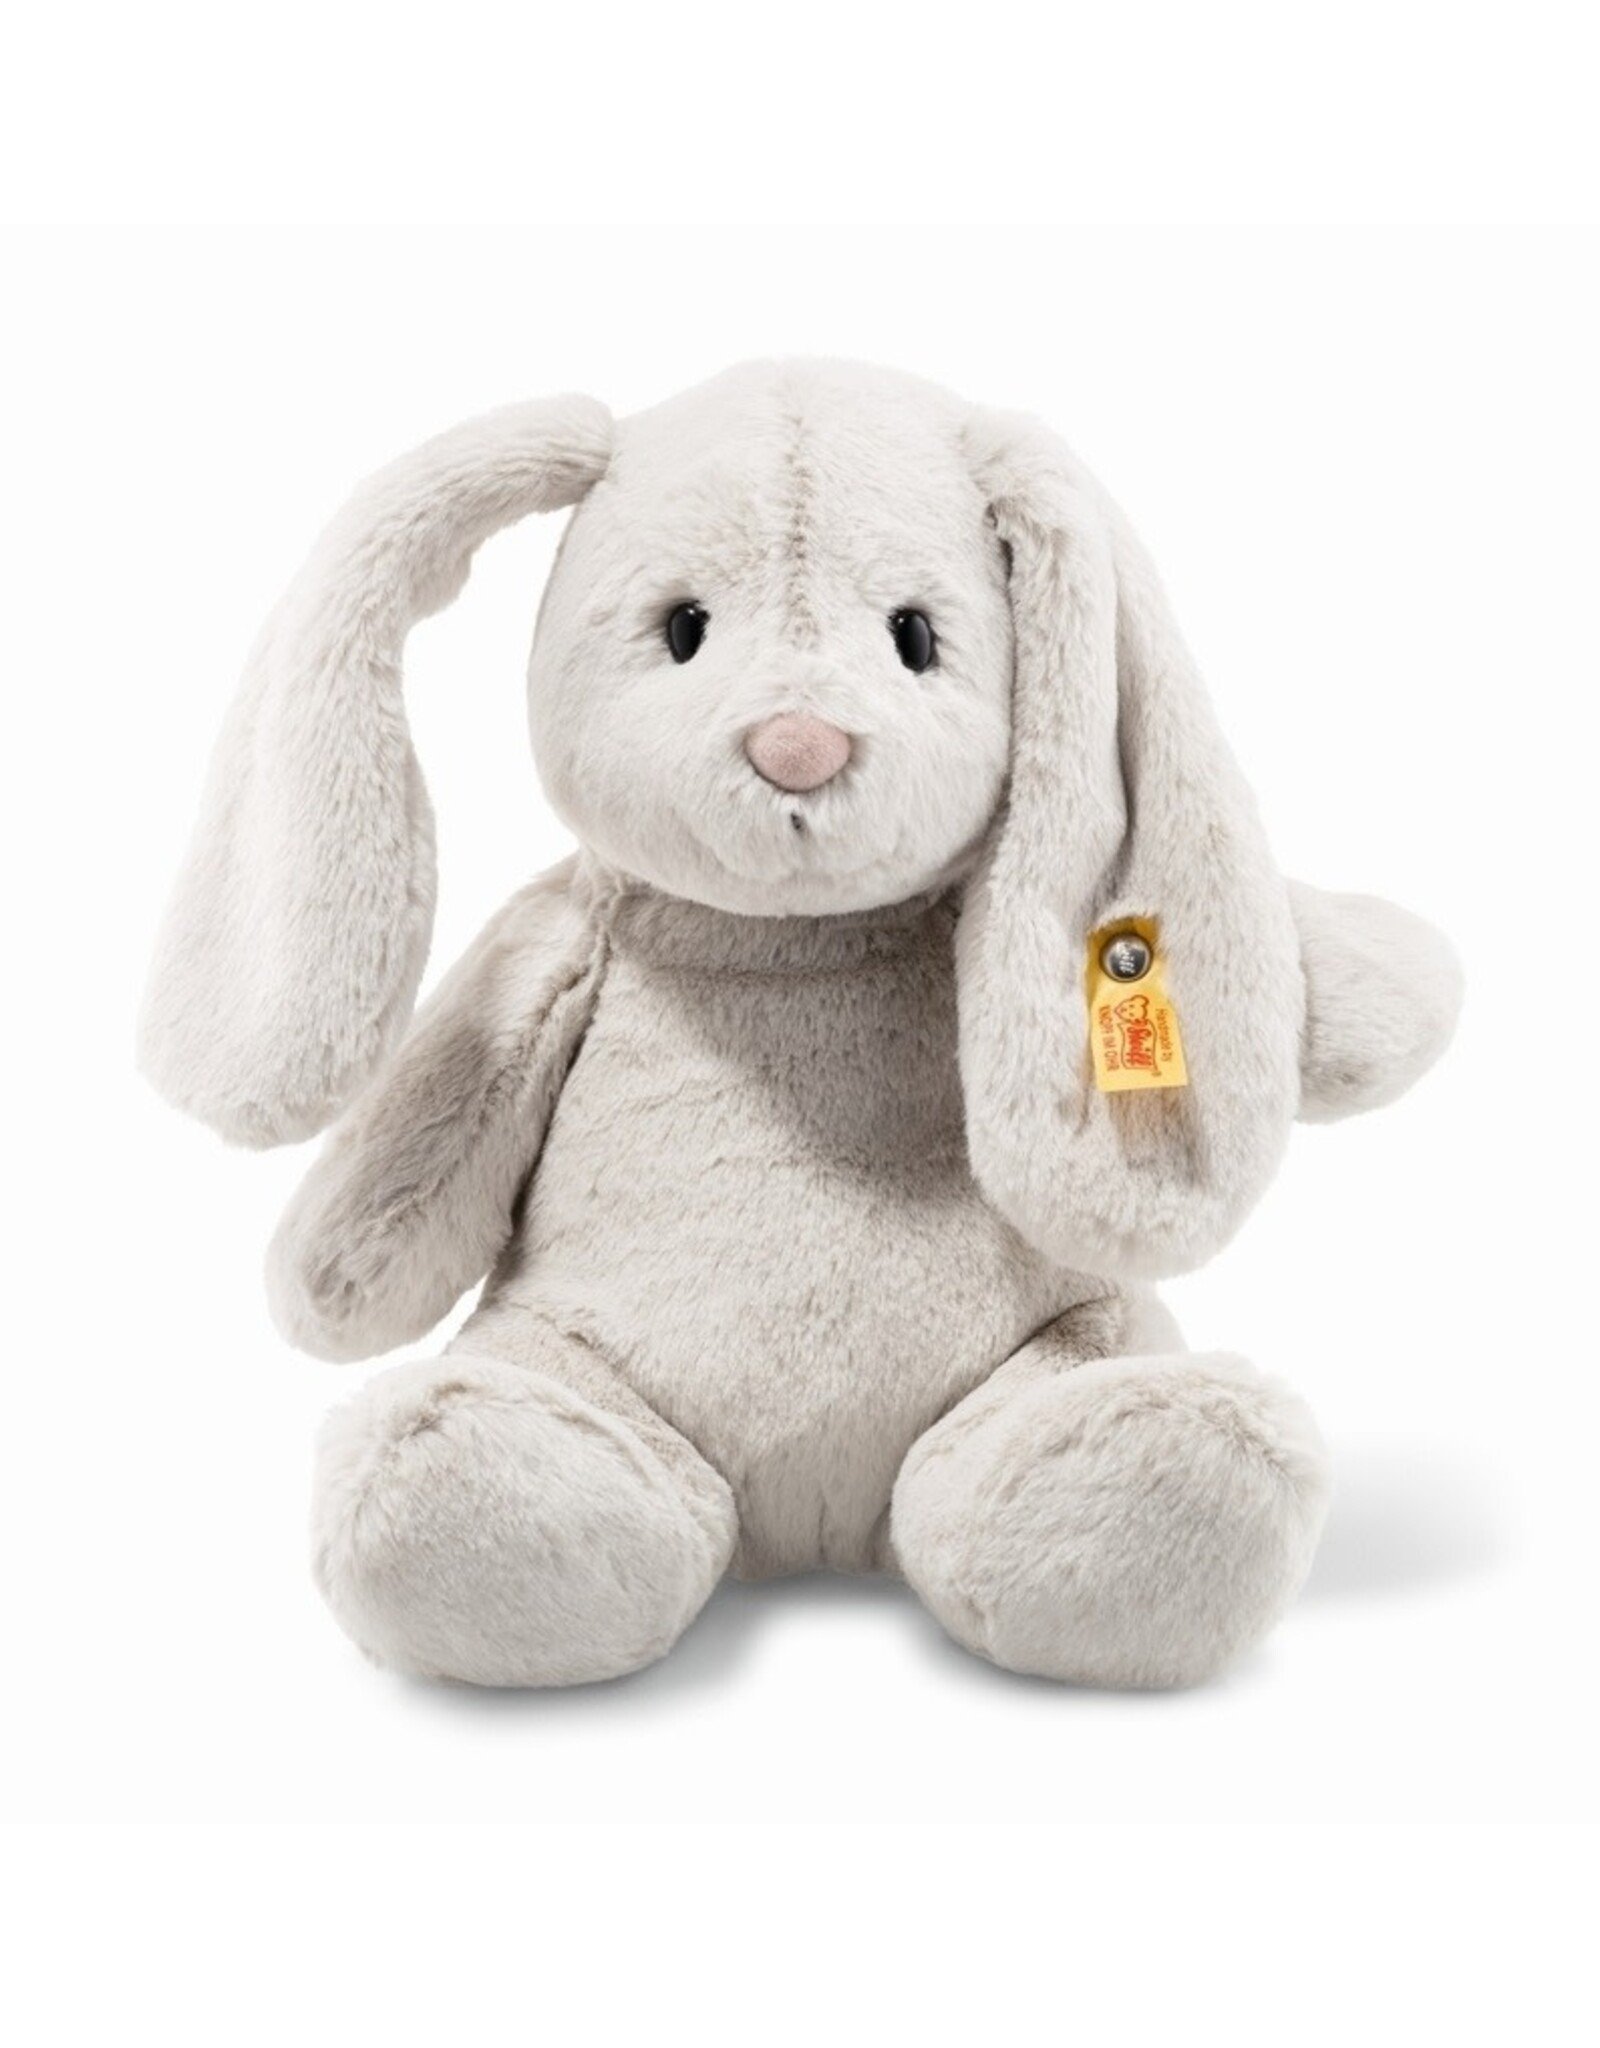 Steiff 11 in. Hoppie Bunny Rabbit Plush Stuffed Toy